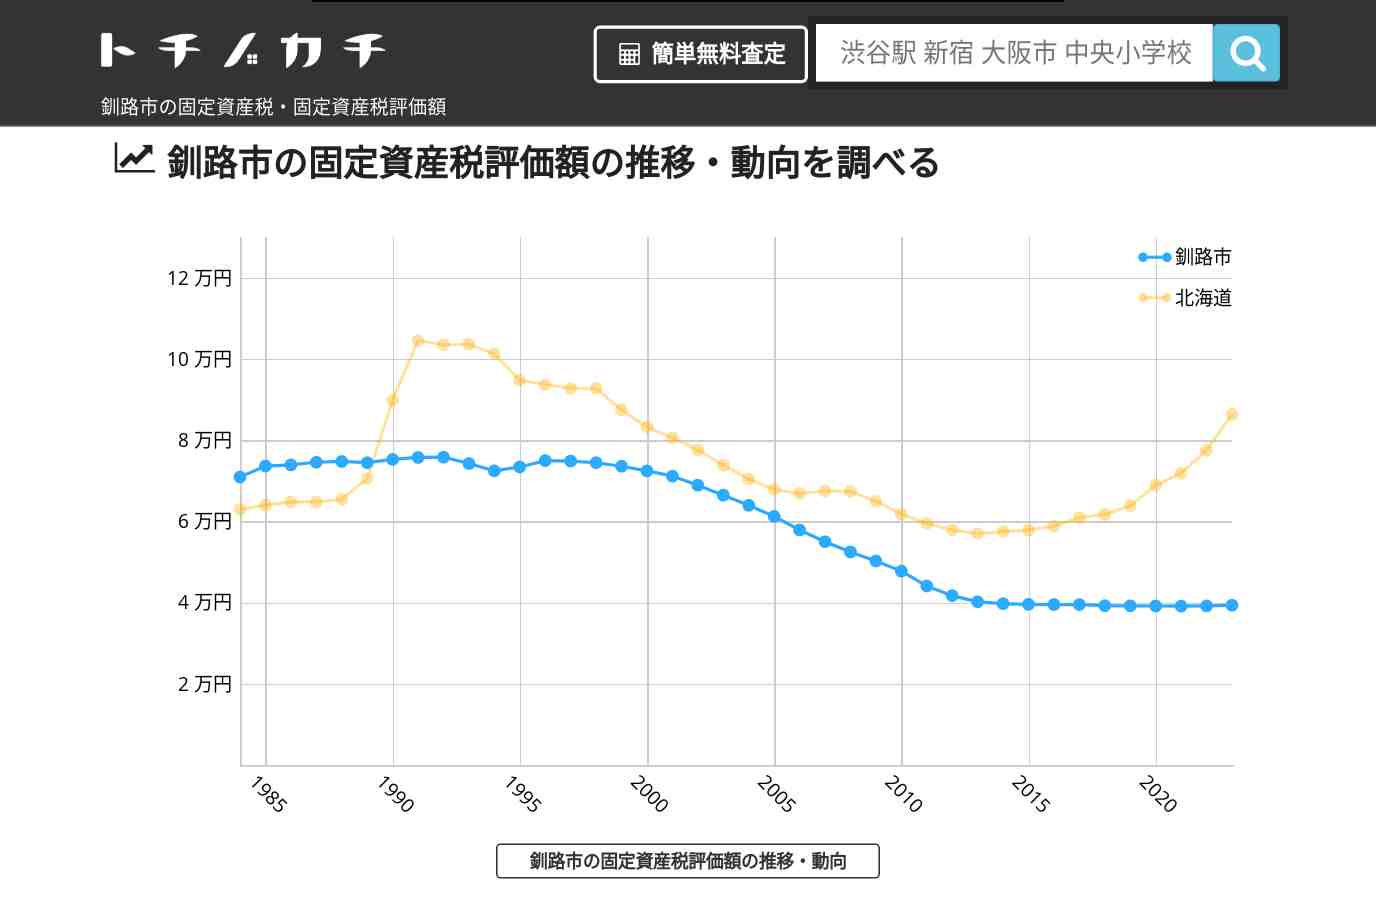 釧路市(北海道)の固定資産税・固定資産税評価額 | トチノカチ